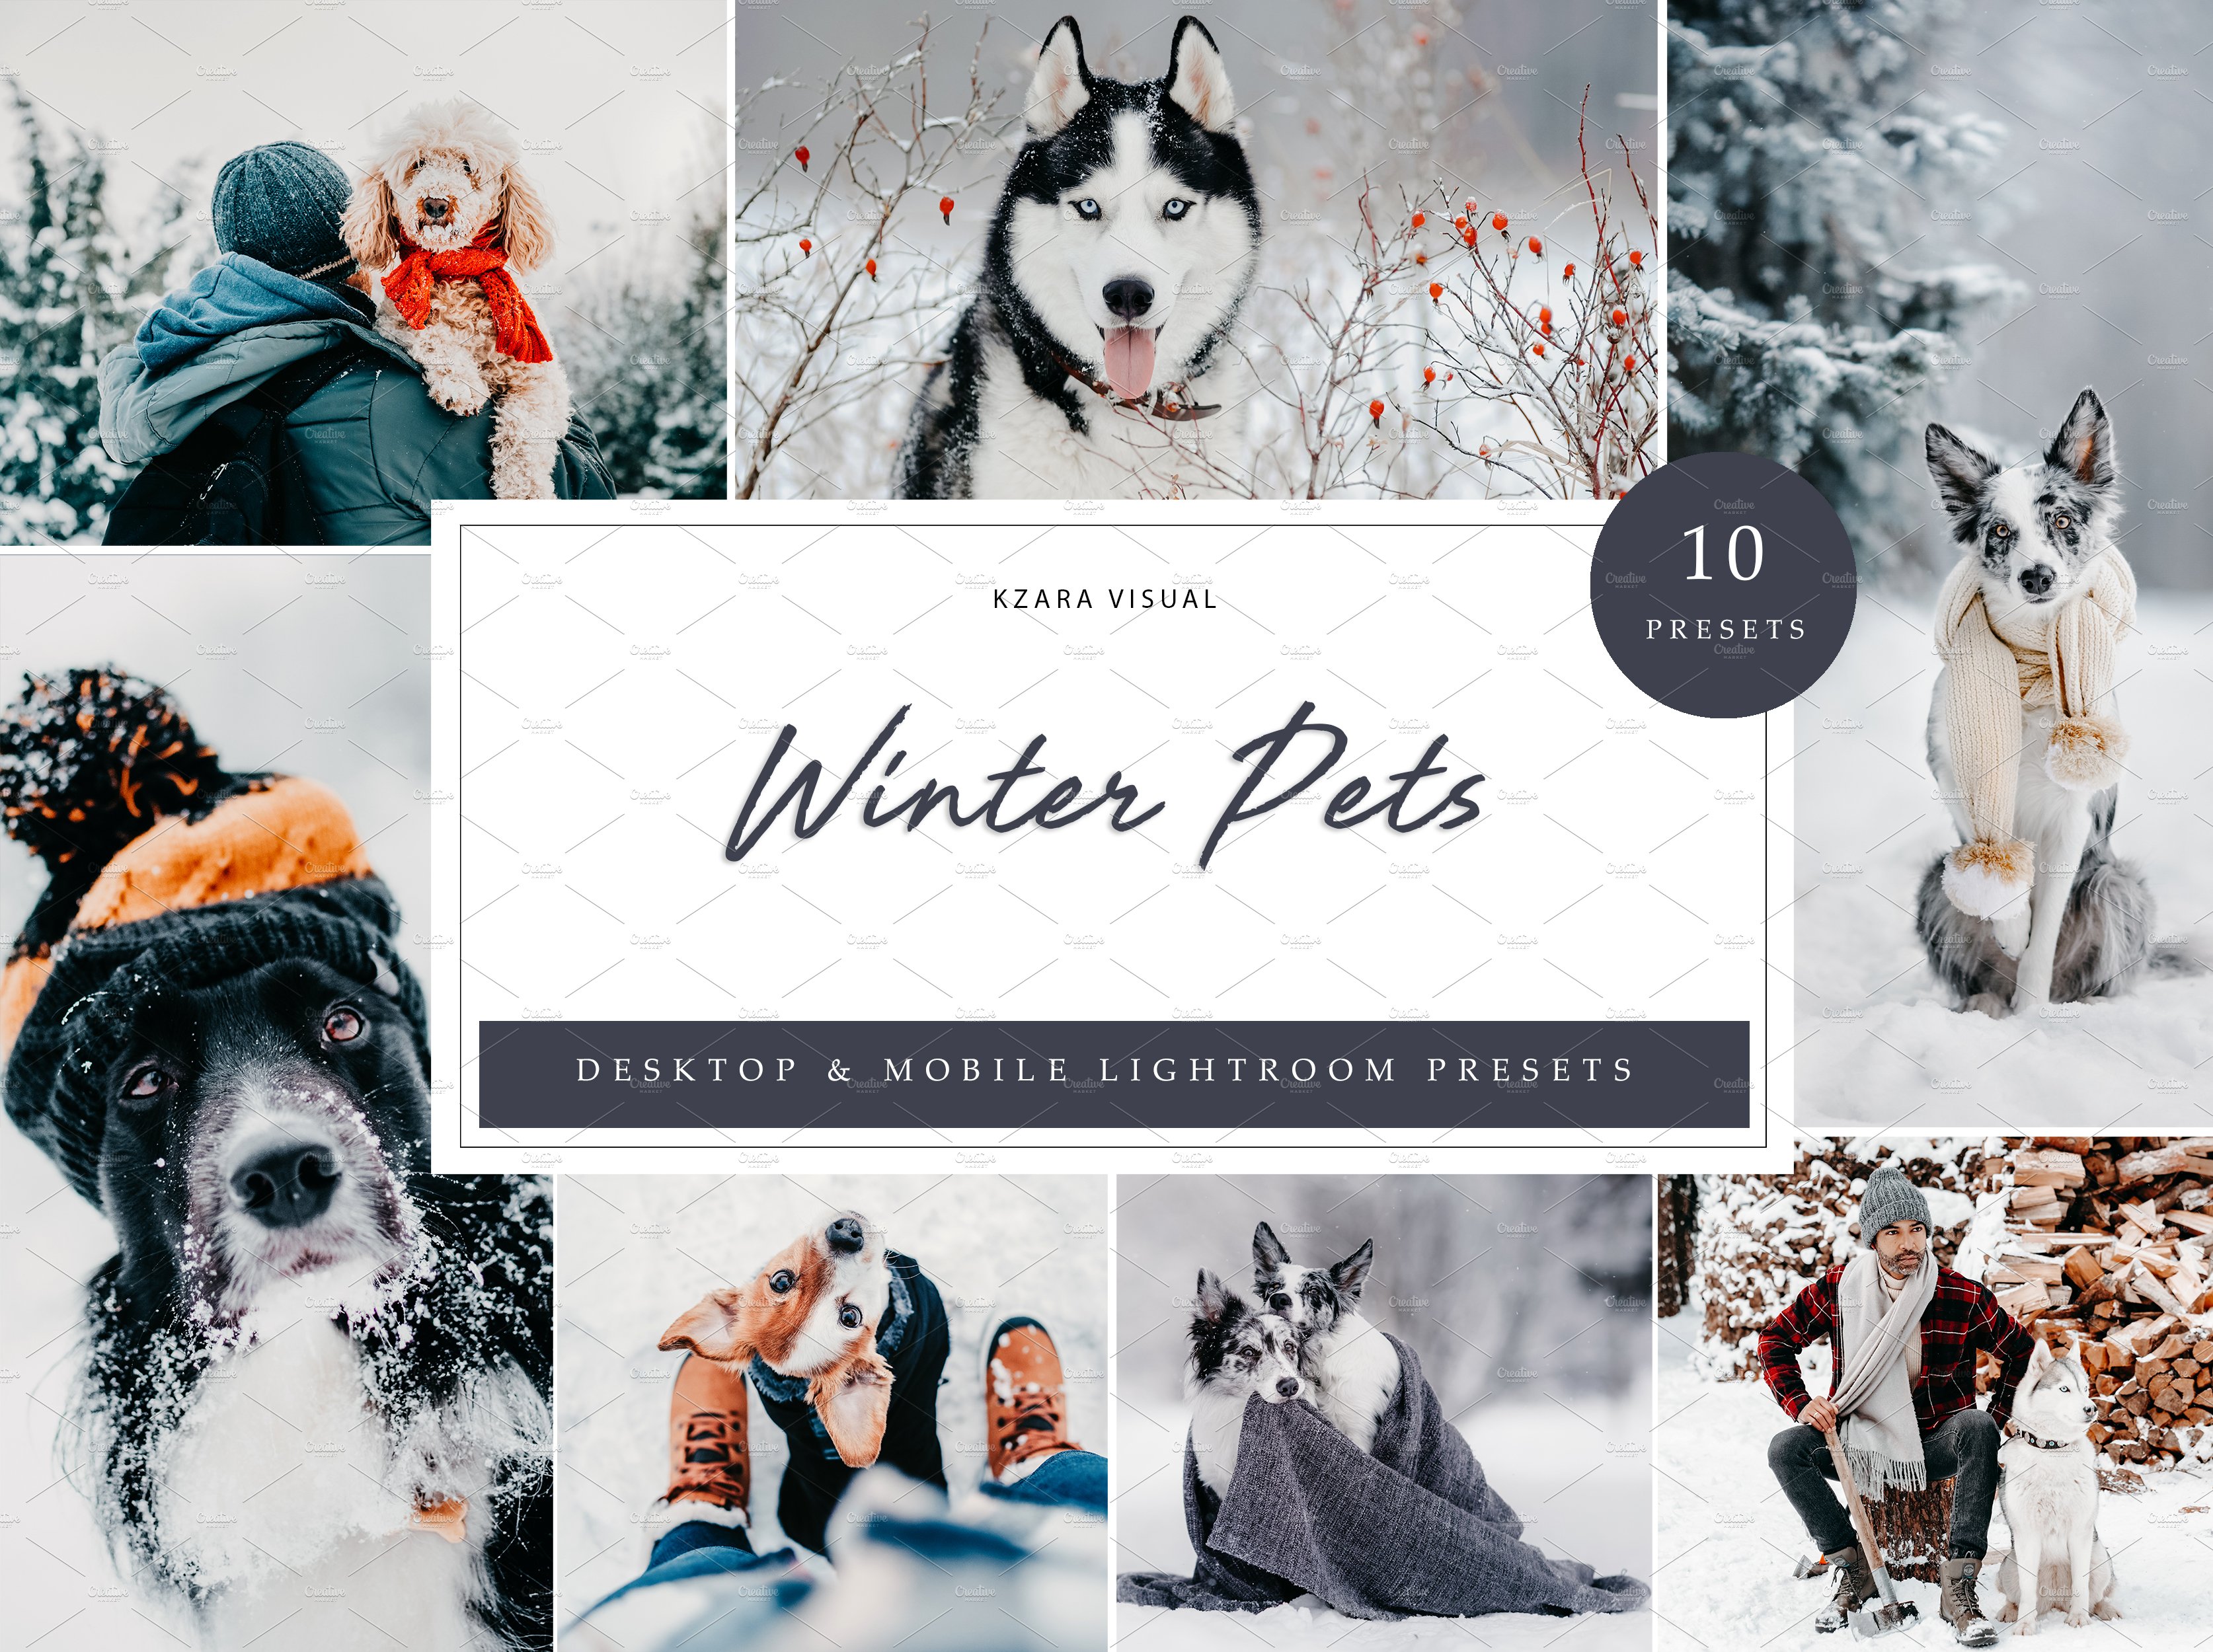 10 x Winter Pets  Lightroom Presetscover image.